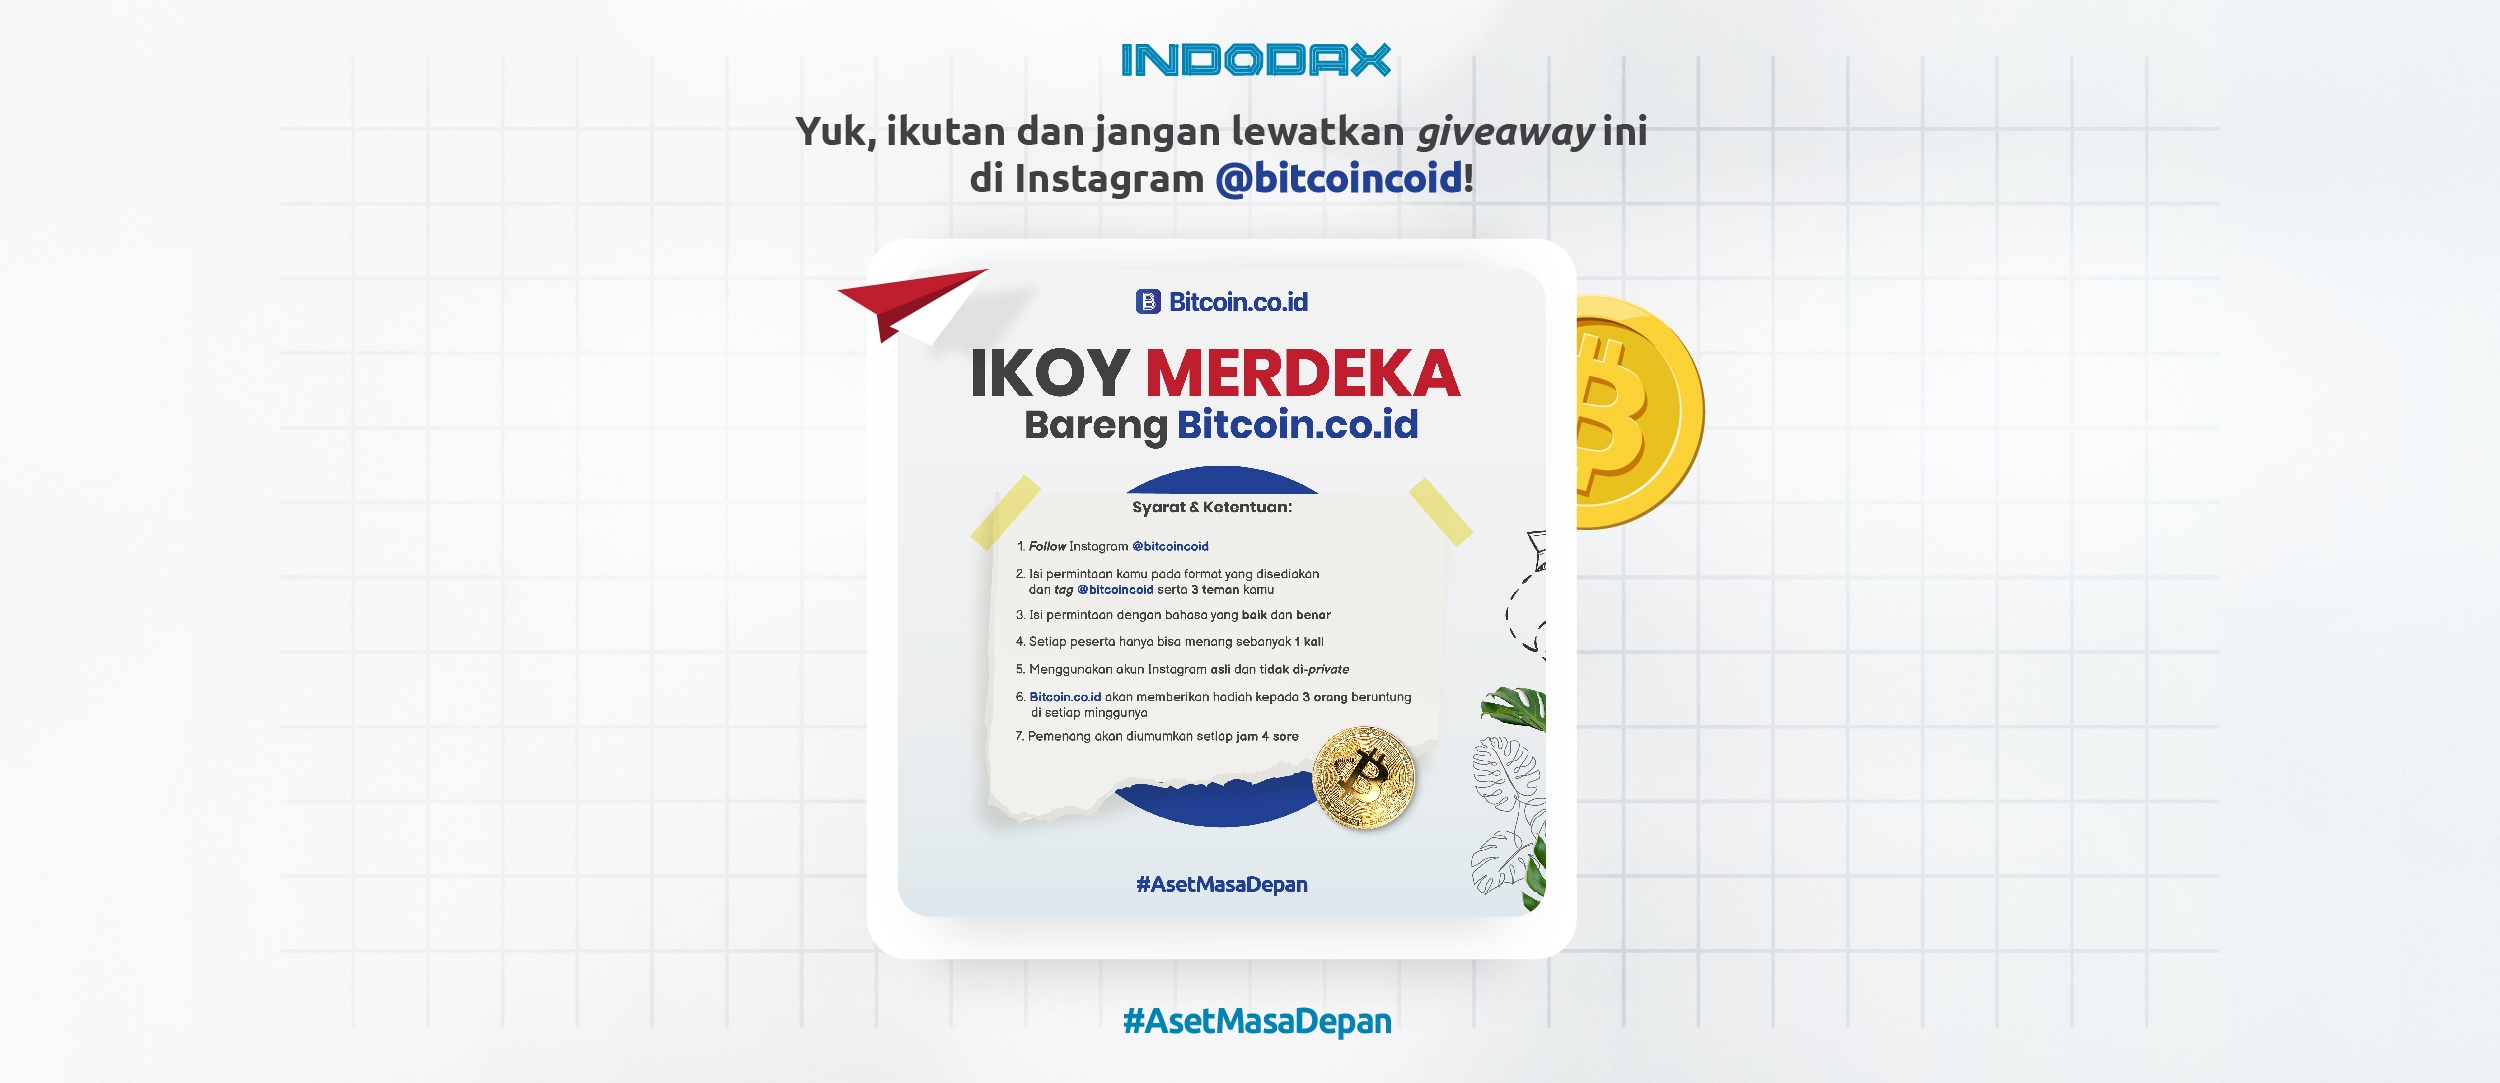 Hey, menyambut Hari Kemerdekaan, Bitcoin.co.id lagi adain ikoy-ikoyan nih. Yuk ikutan Ikoy Merdeka di Instagram @Bitcoincoid #indodax #asetmasadepan